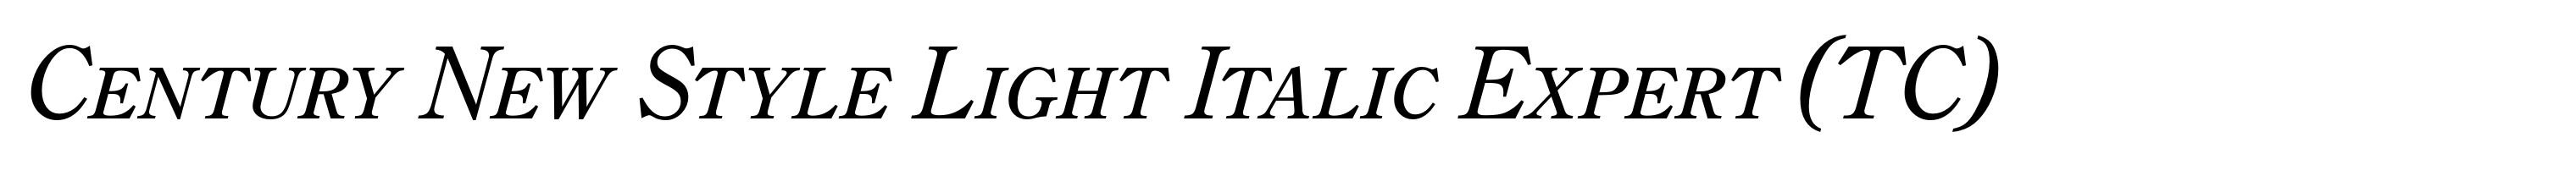 Century New Style Light Italic Expert (TC)